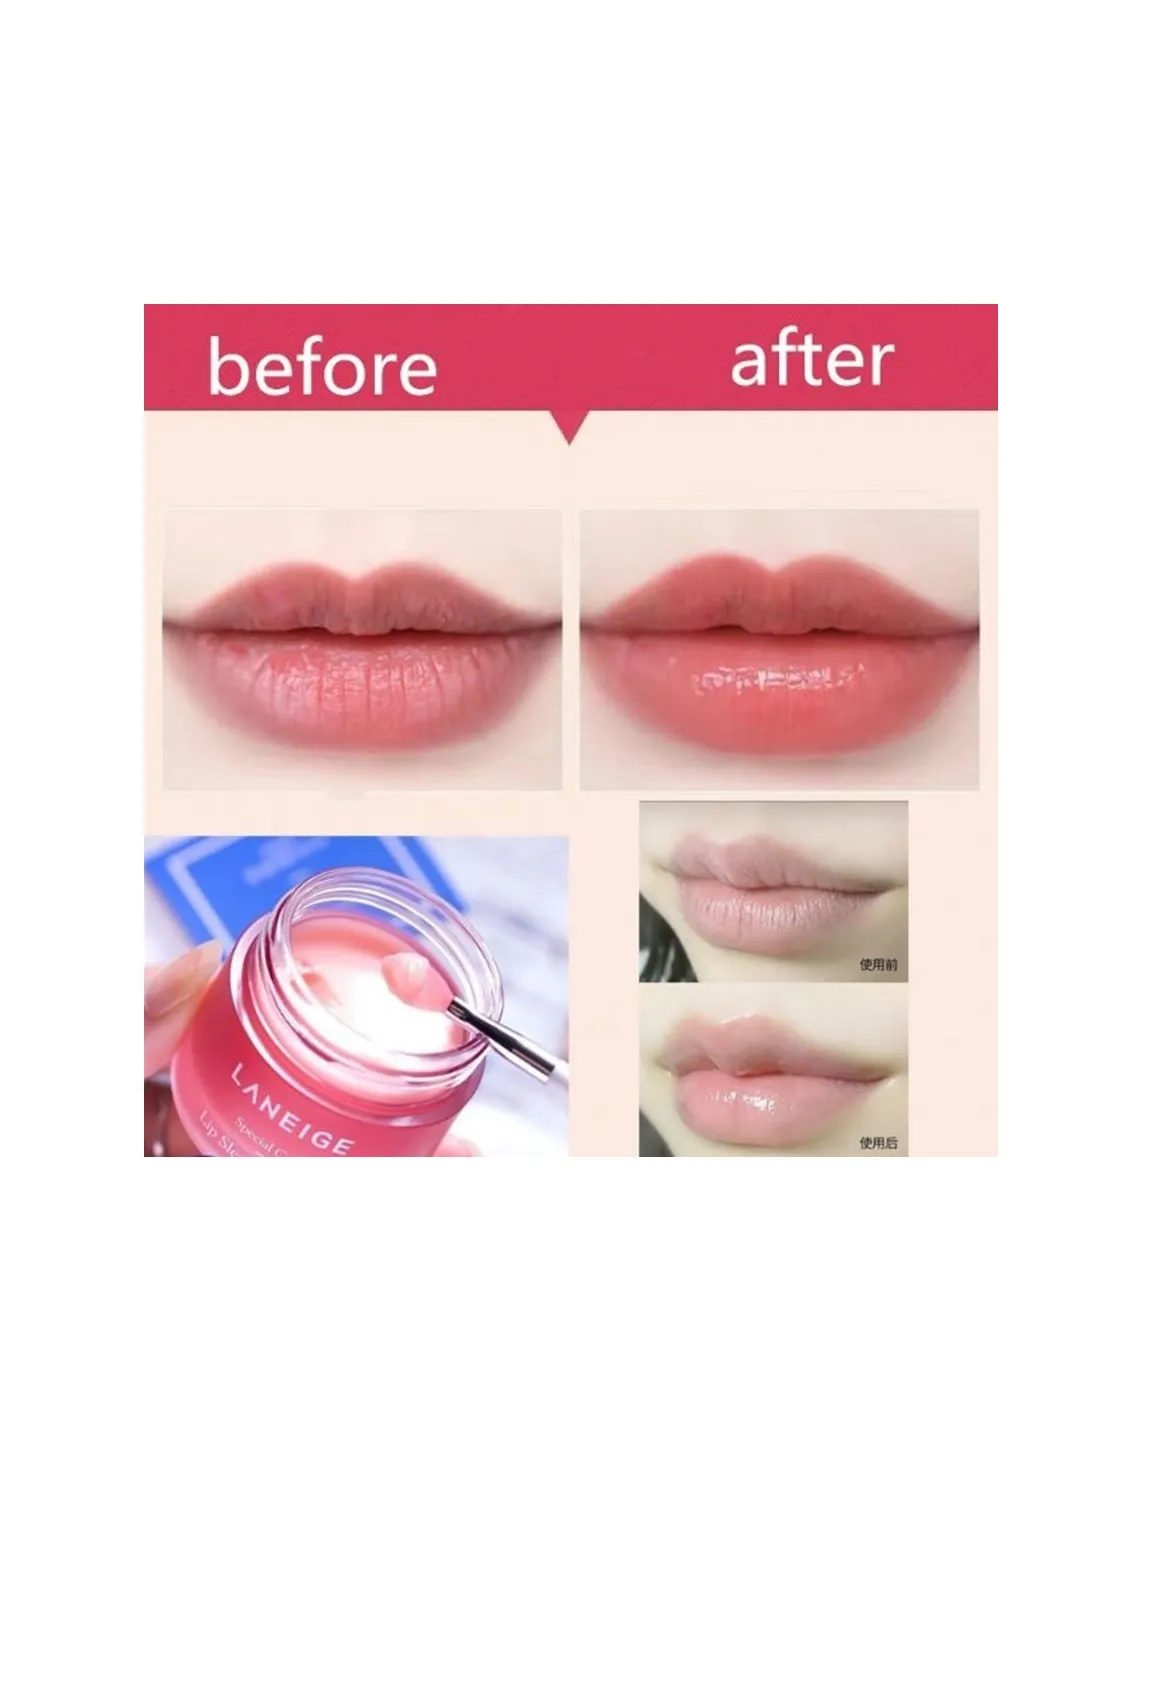 Laneige Mascara Mint Choco Lips - g a $7700